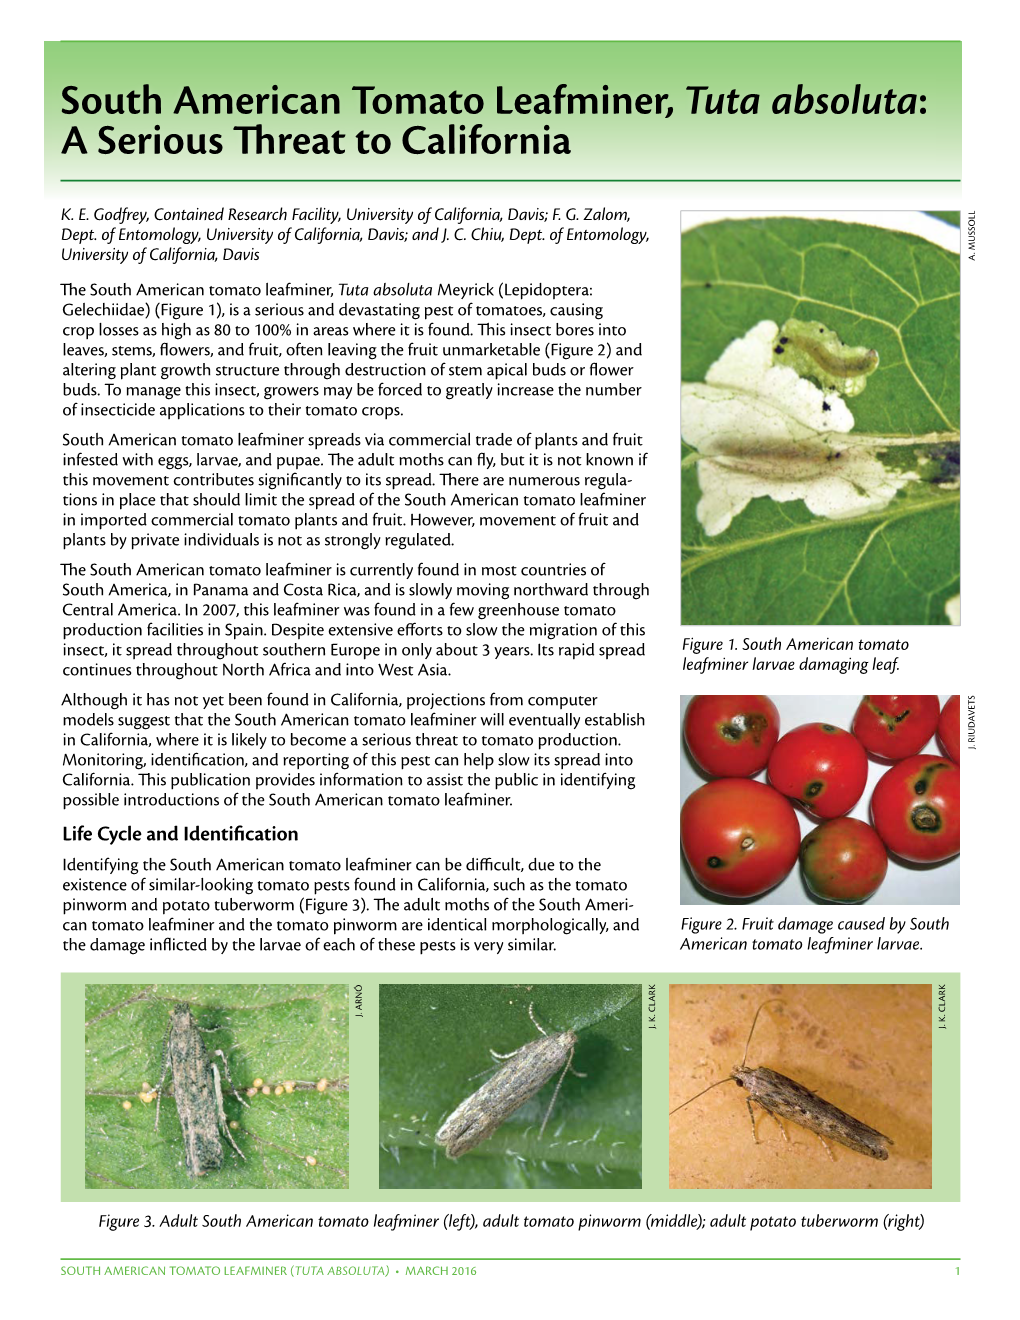 South American Tomato Leafminer, Tuta Absoluta: a Serious Threat to California